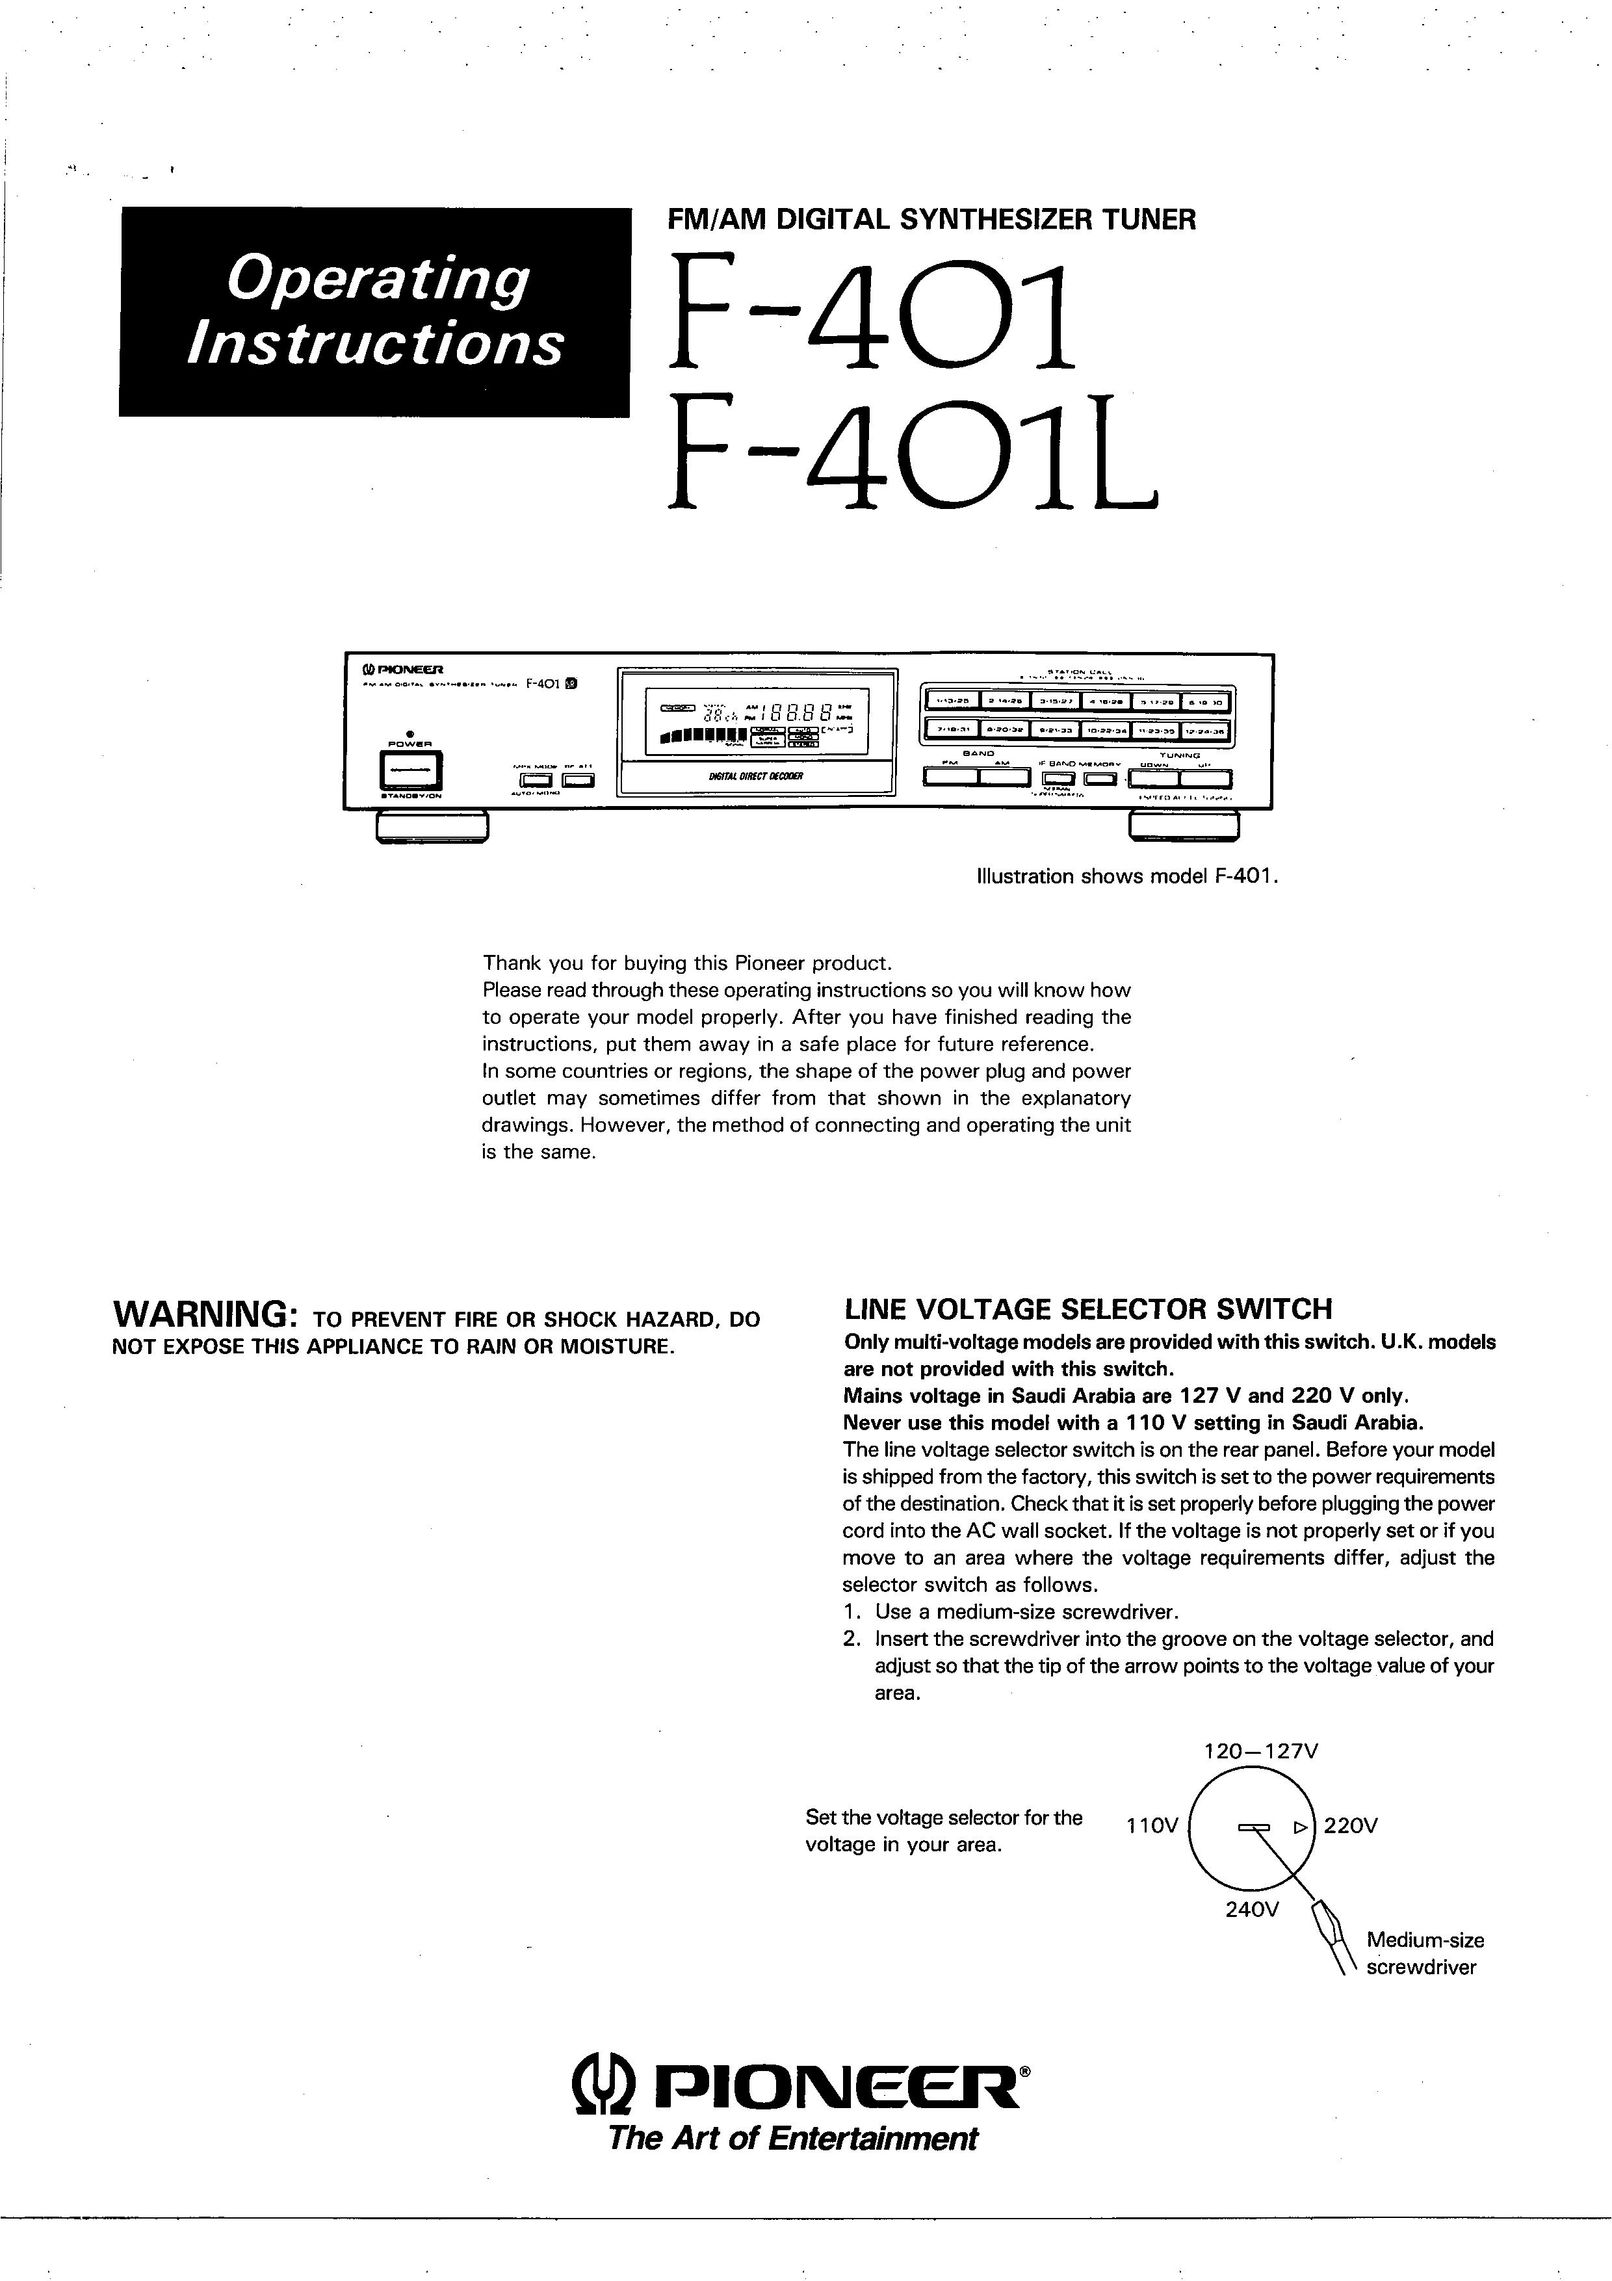 Pioneer F-401 TV Receiver User Manual